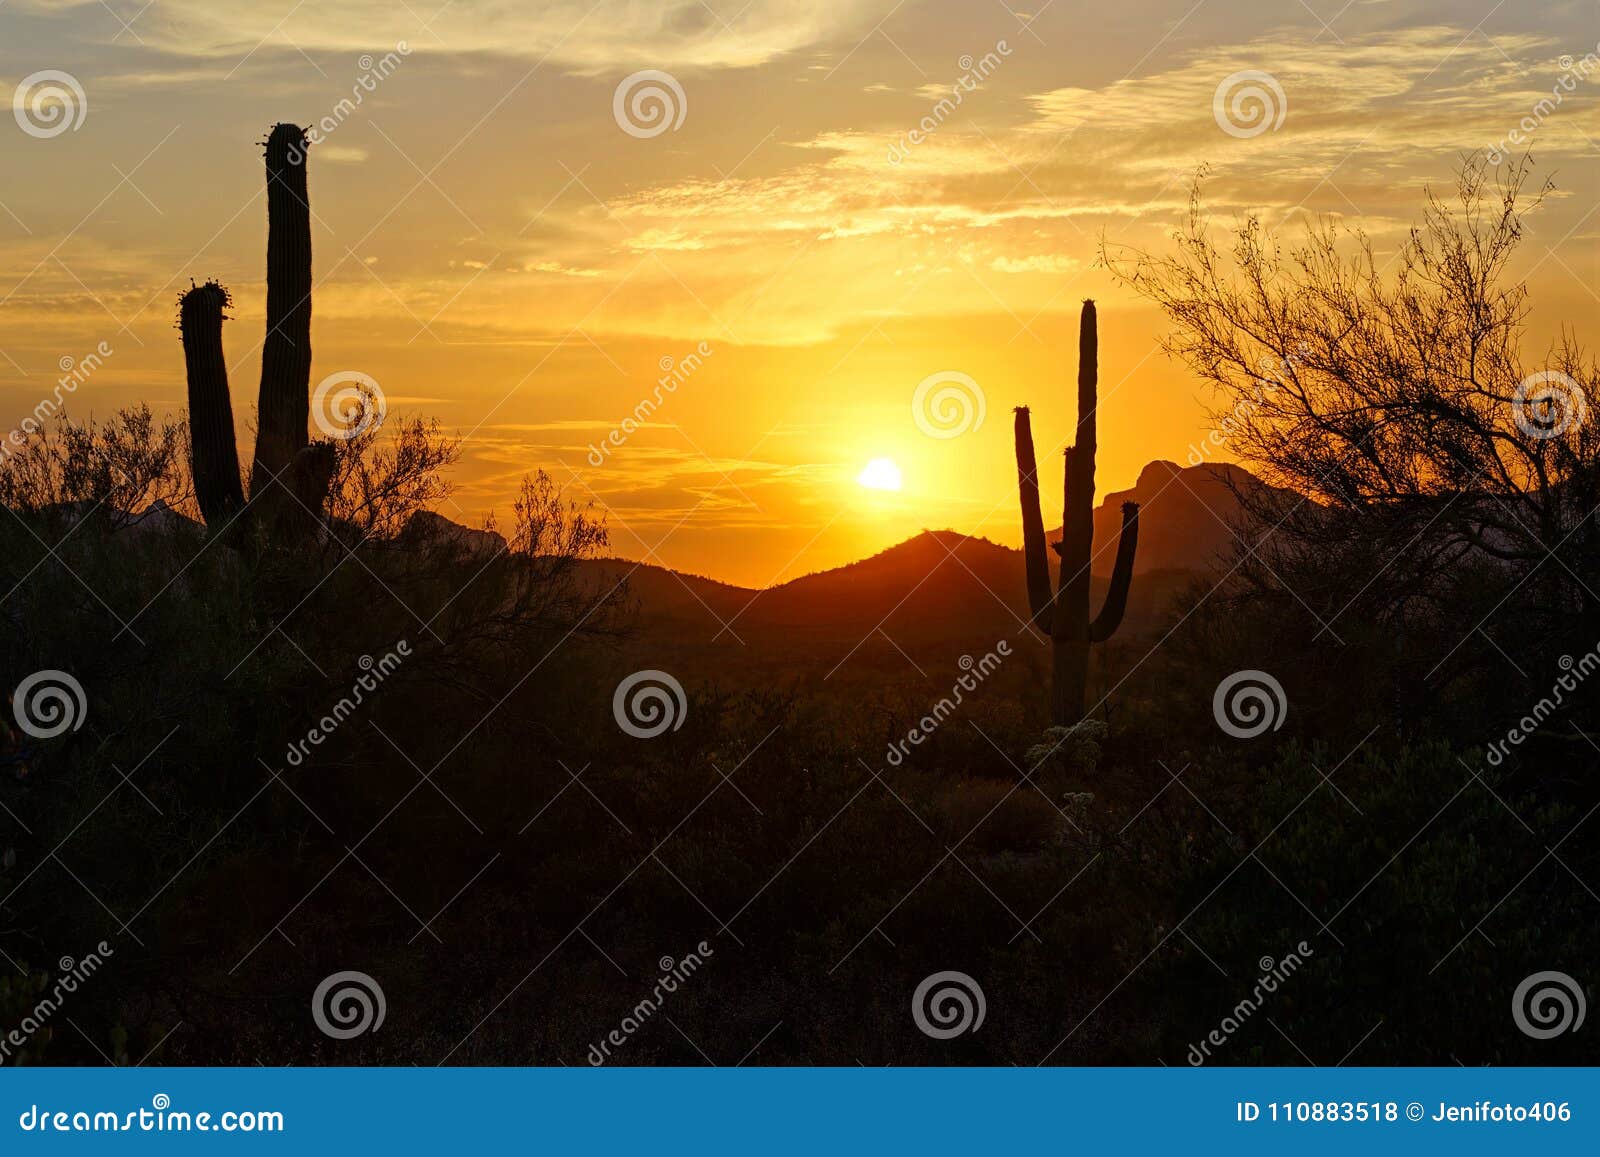 Sunset Silhouette in the Arizona Desert with Saguaro Cacti Stock Photo ...